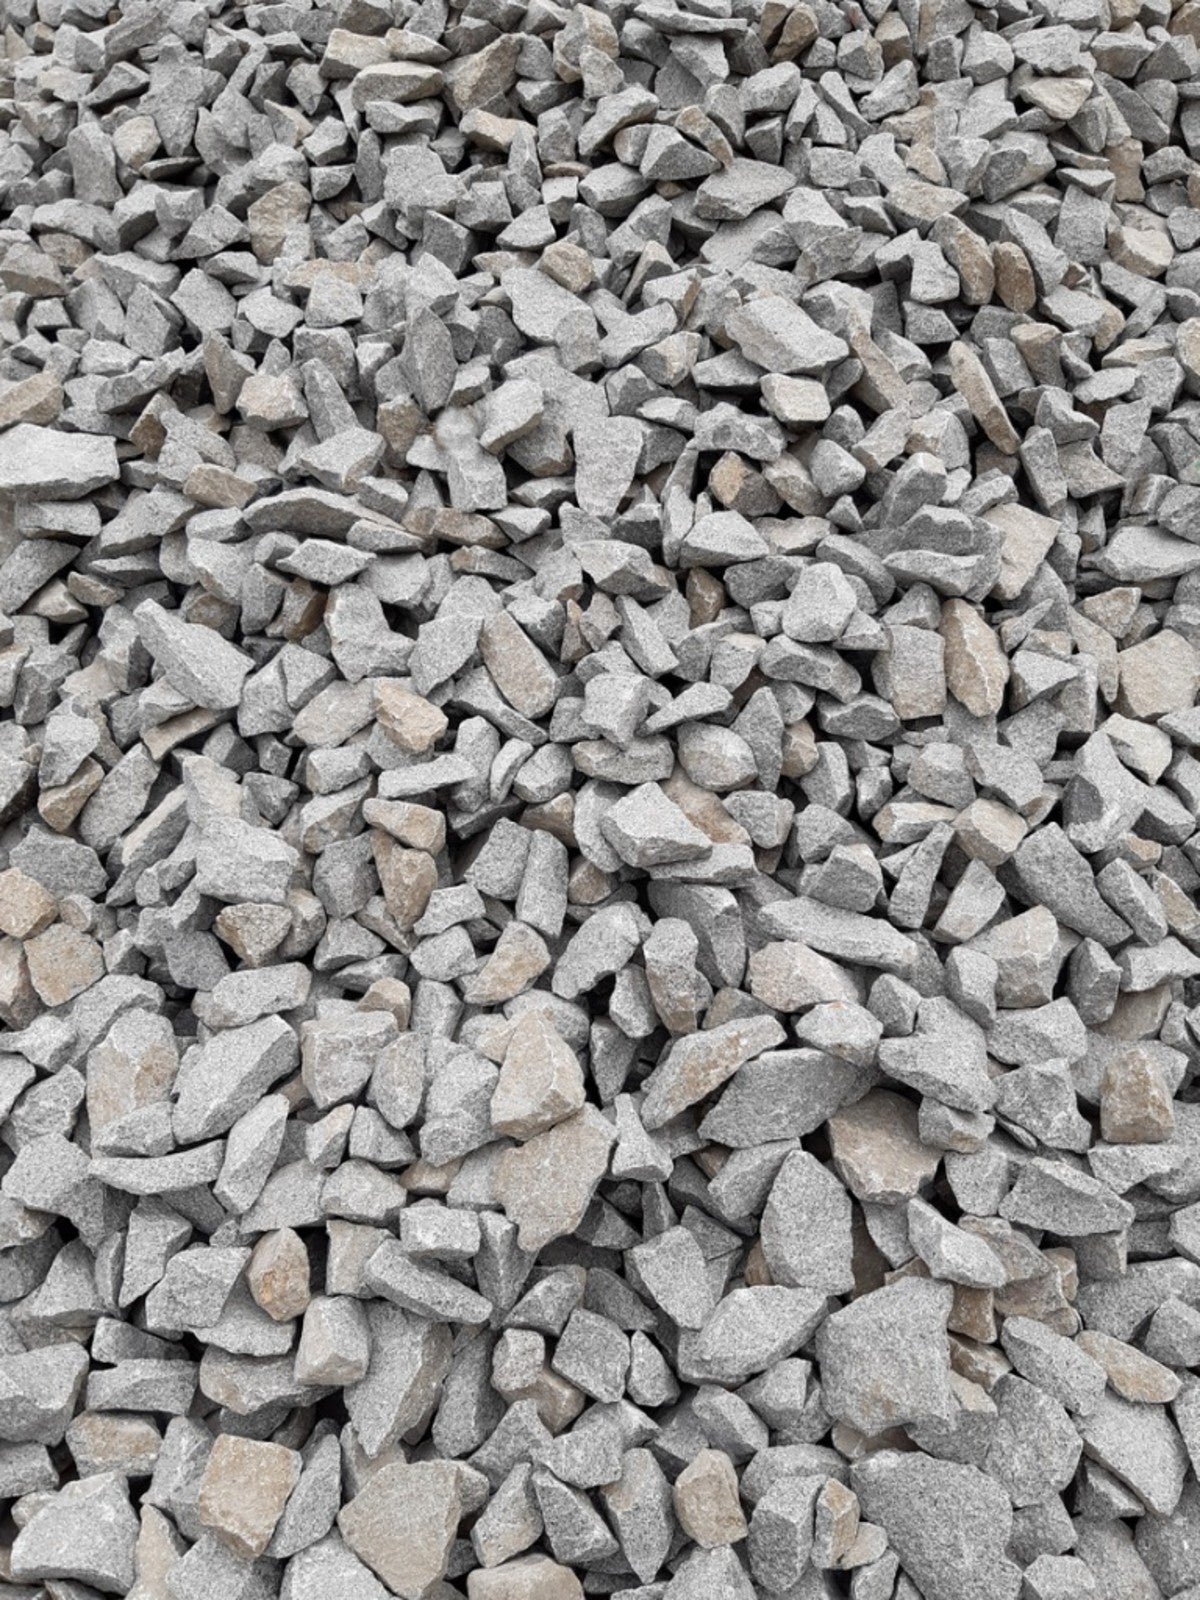 Crushed Rock Landscape Design Using, How Do I Measure Much Landscape Rock Needle